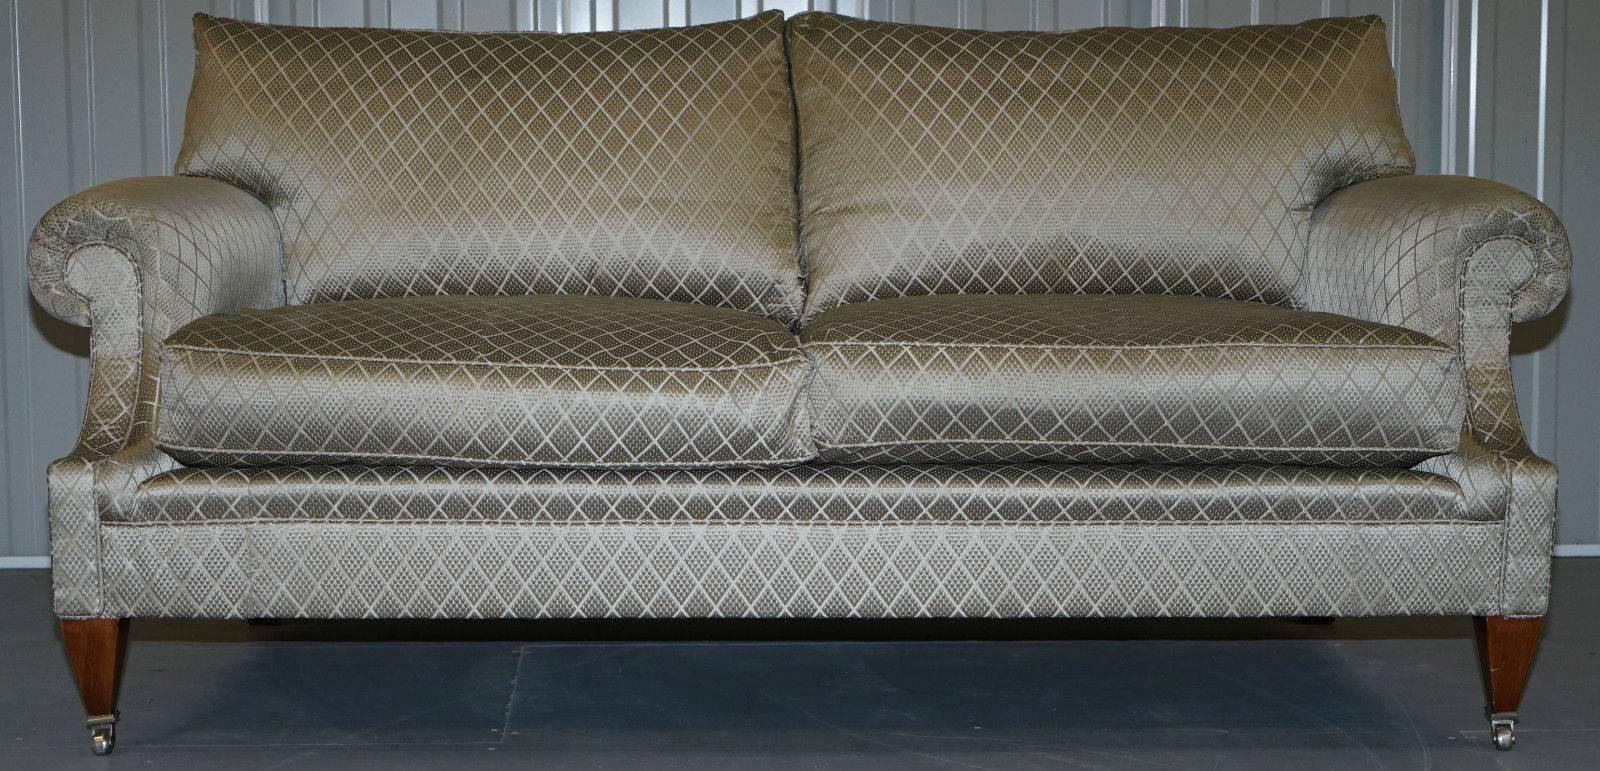 Pair of Harrods Mayfair Inc Original Receipt Artistic Silk Upholstery Sofas 1